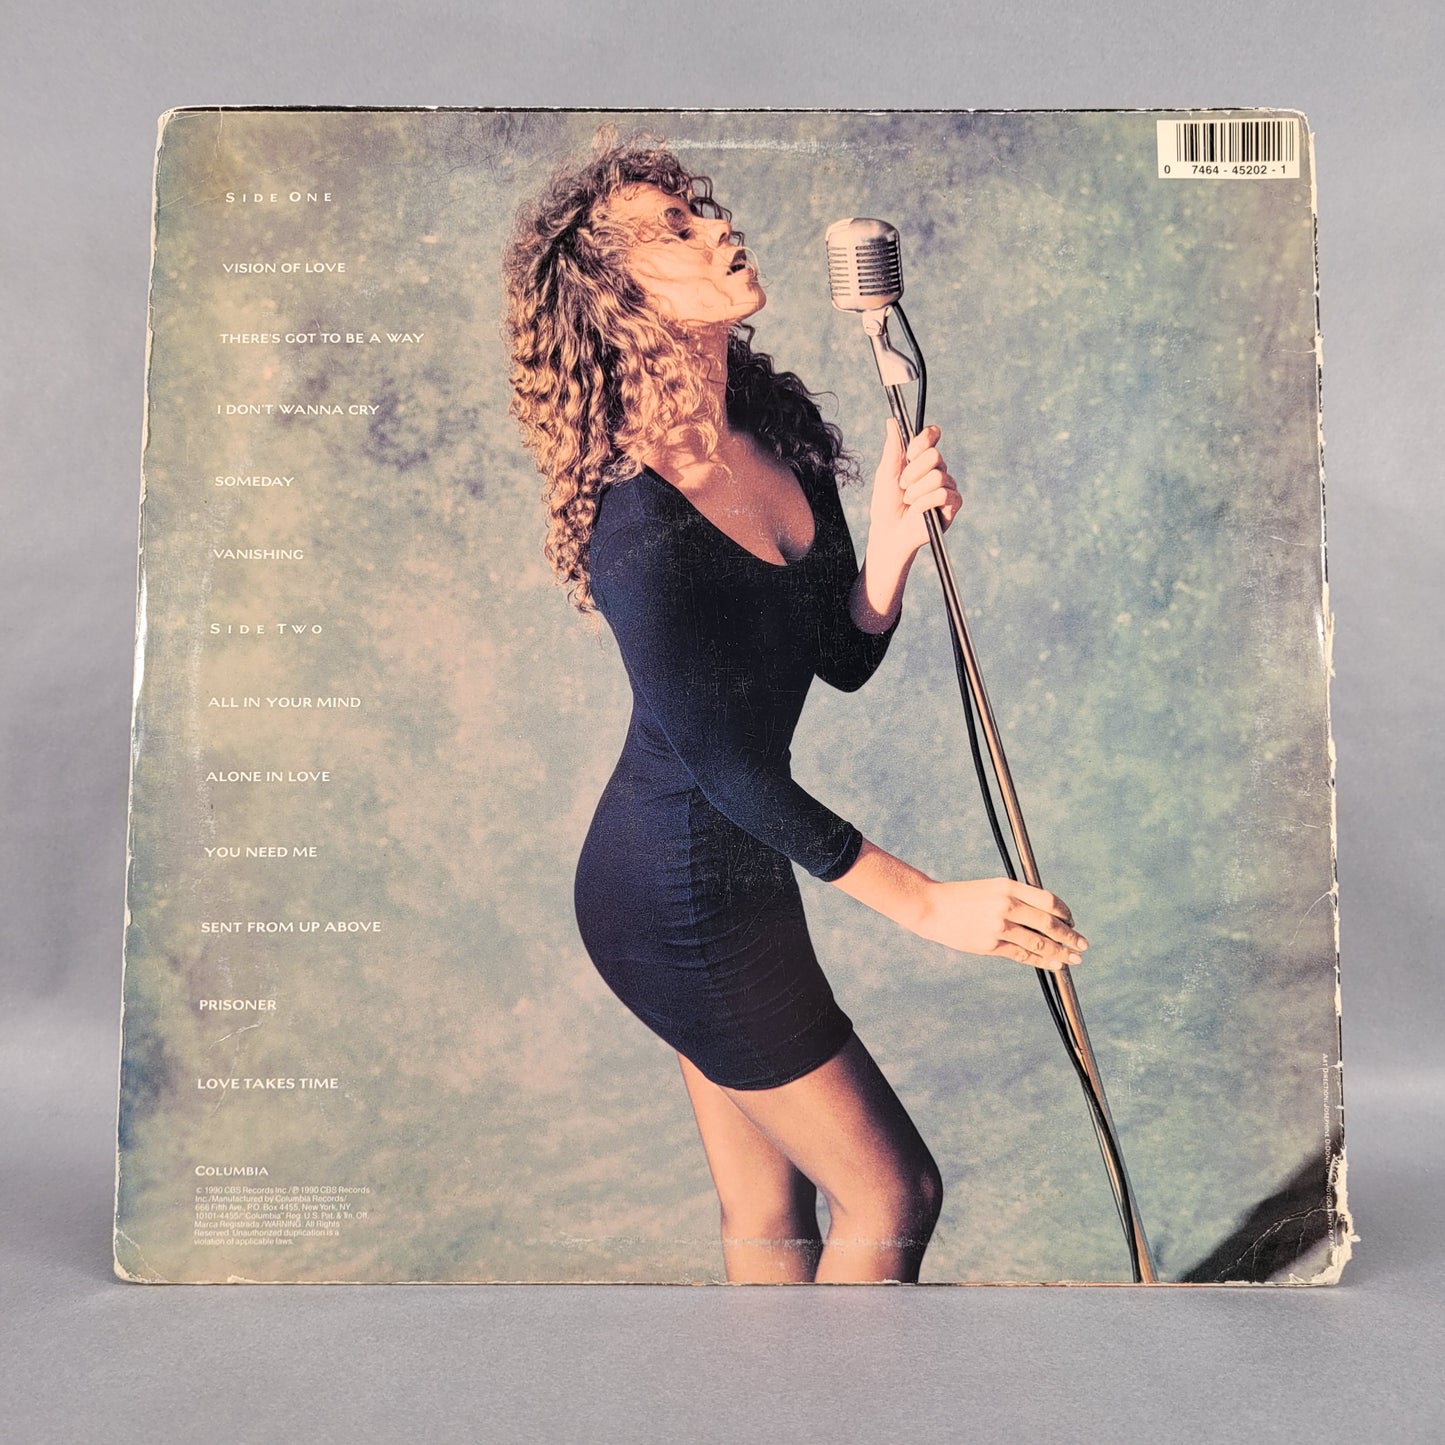 Mariah Carey "Mariah Carey" Vinyl Record Album